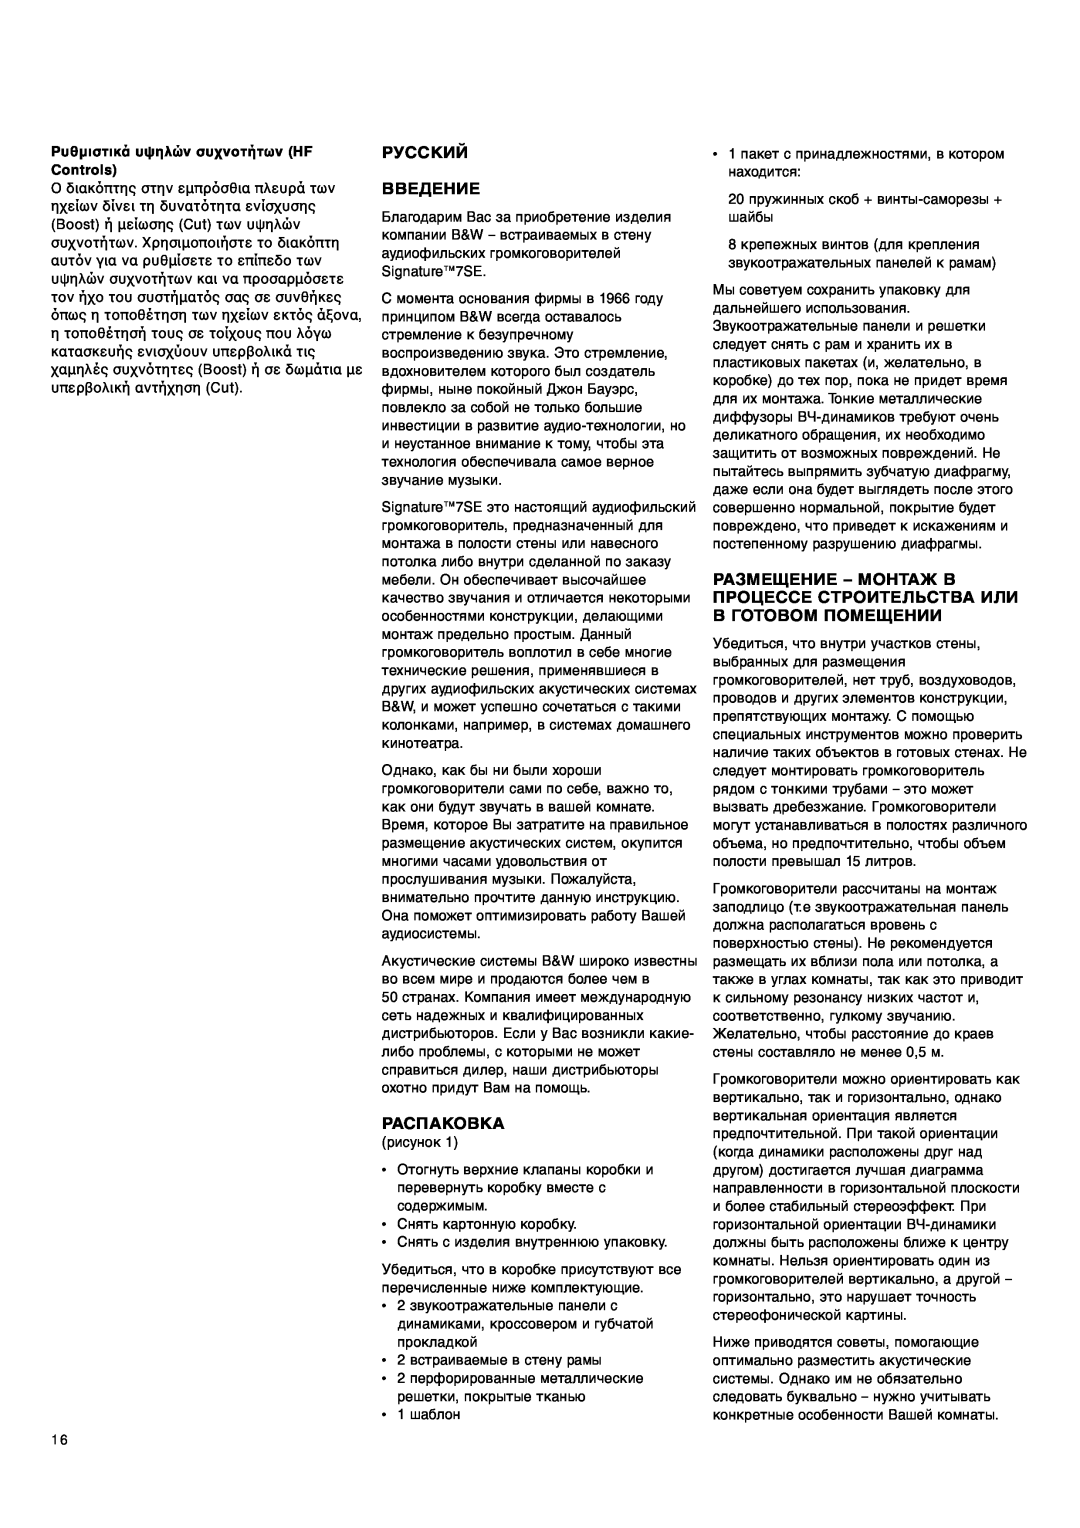 Bowers & Wilkins Signature 7SE owner manual Русский Введение, Распаковка, Ρυθµιστικά υψηλών συHF Controls 